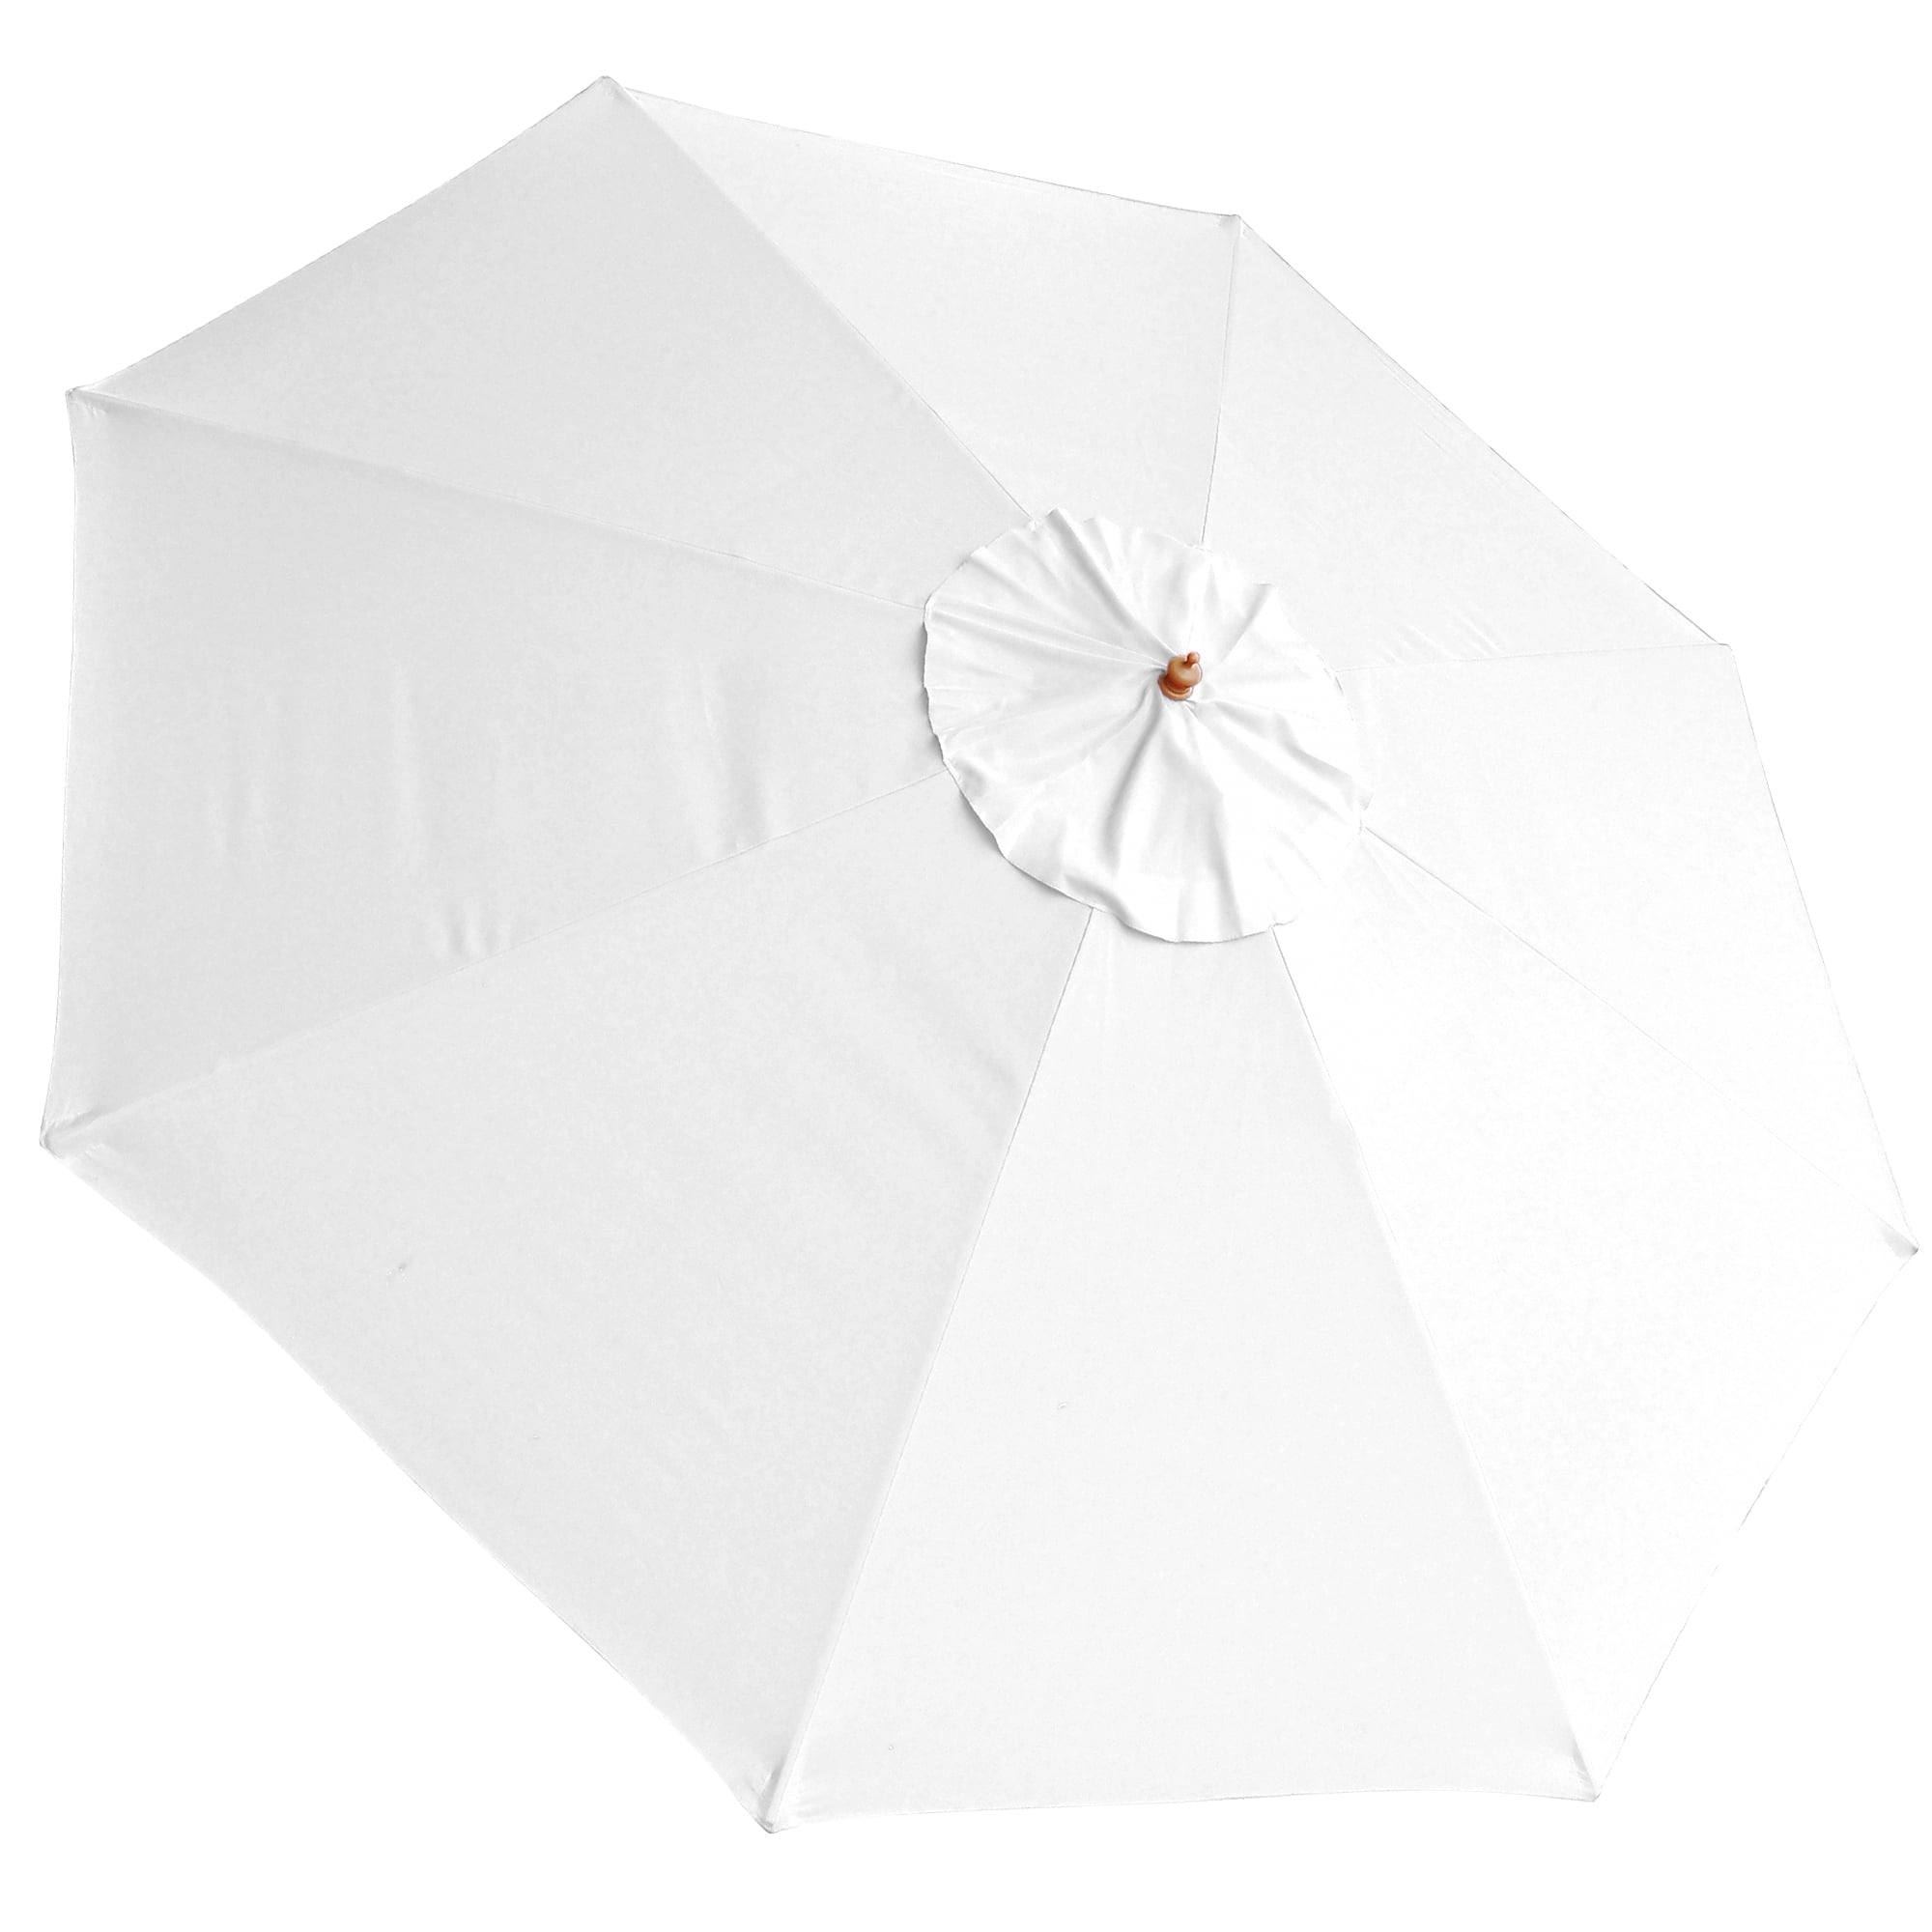 13 Ft Outdoor Market Umbrella Replacement Canopy 